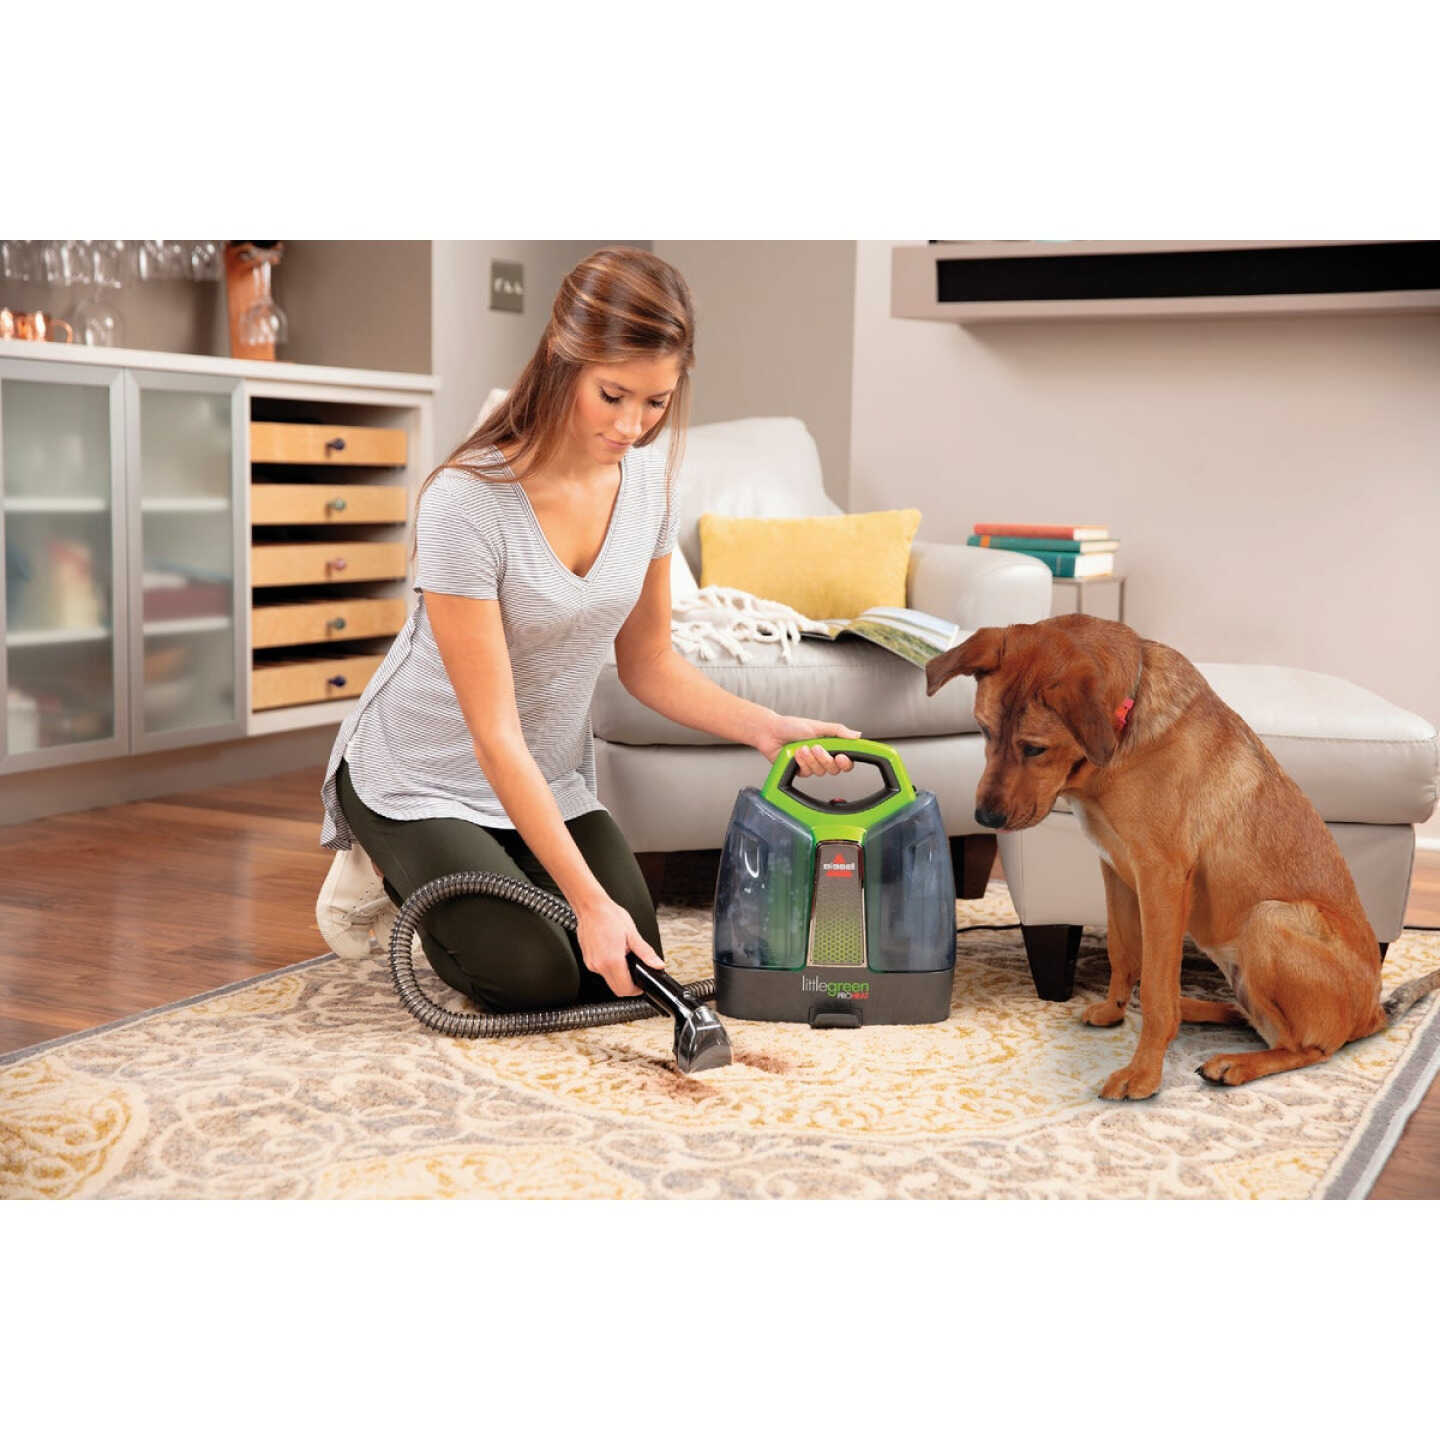 Spillbuster Portable Carpet Cleaner, Cordless Spill And Spot Cleaner